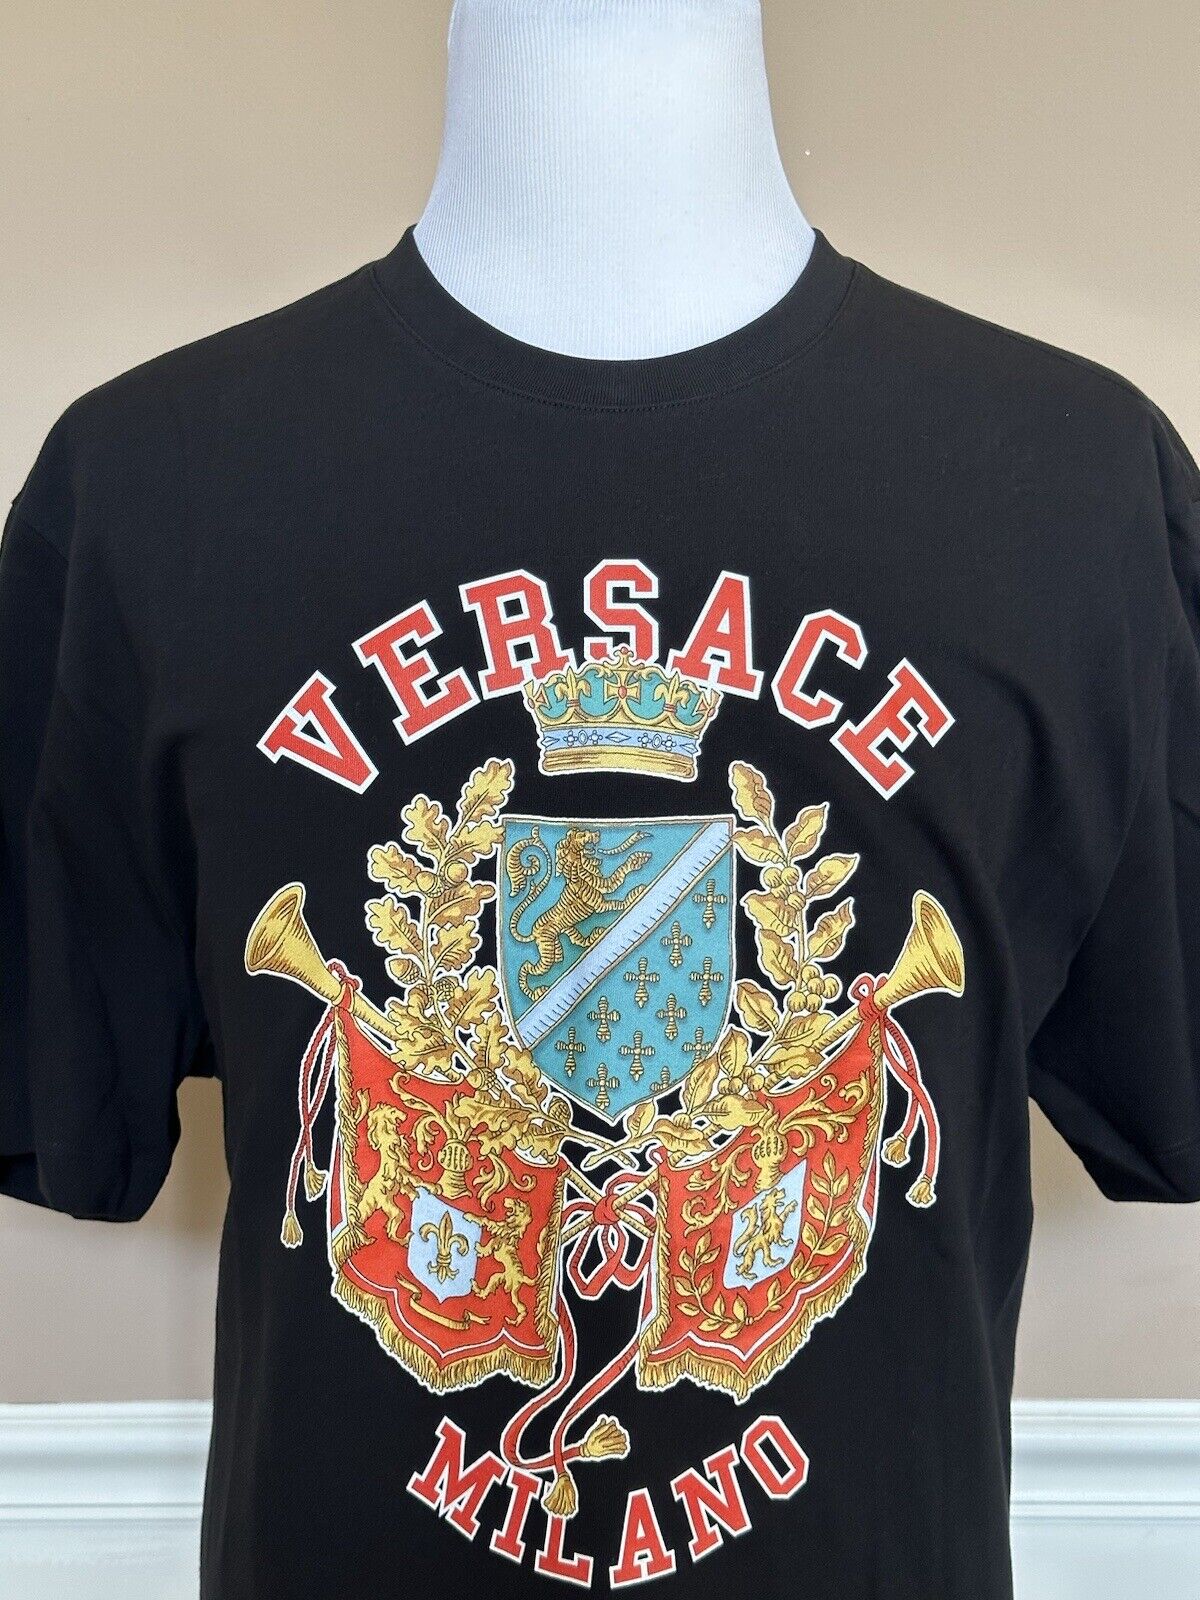 NWT $525 Versace Milano Logo Черная трикотажная футболка Mitchel Fit 2XL 1005188 Италия